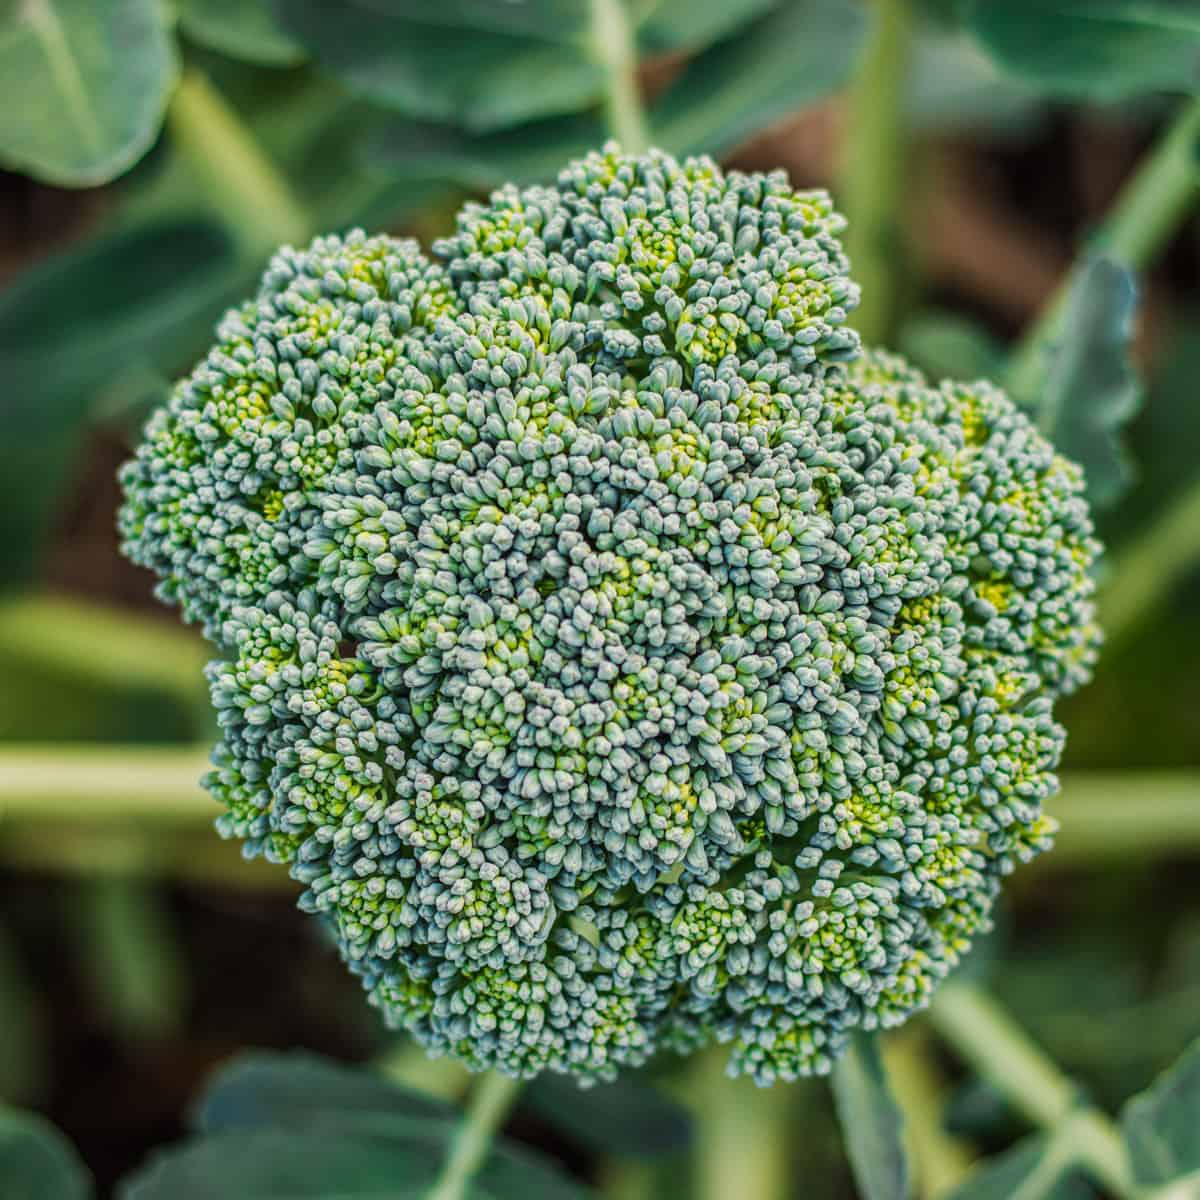 Broccoli companion plants